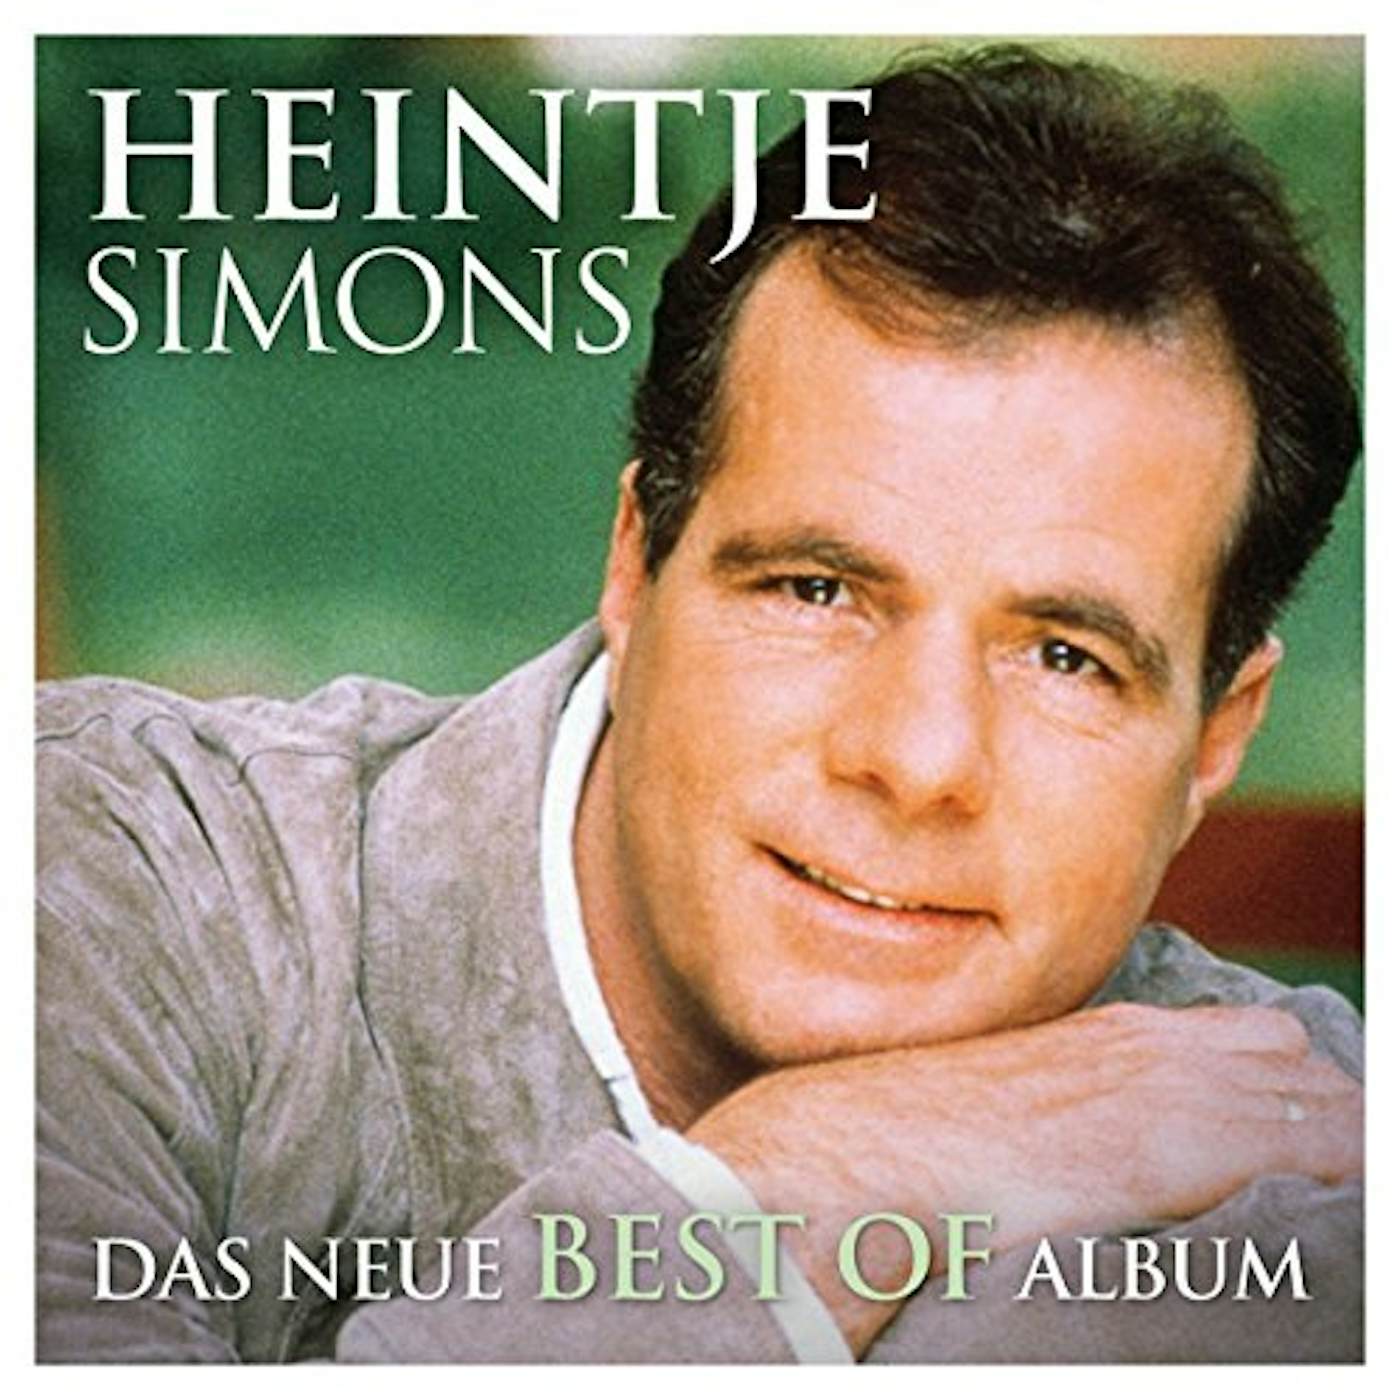 Heintje Simons DAS NEUE BEST OF ALBUM CD